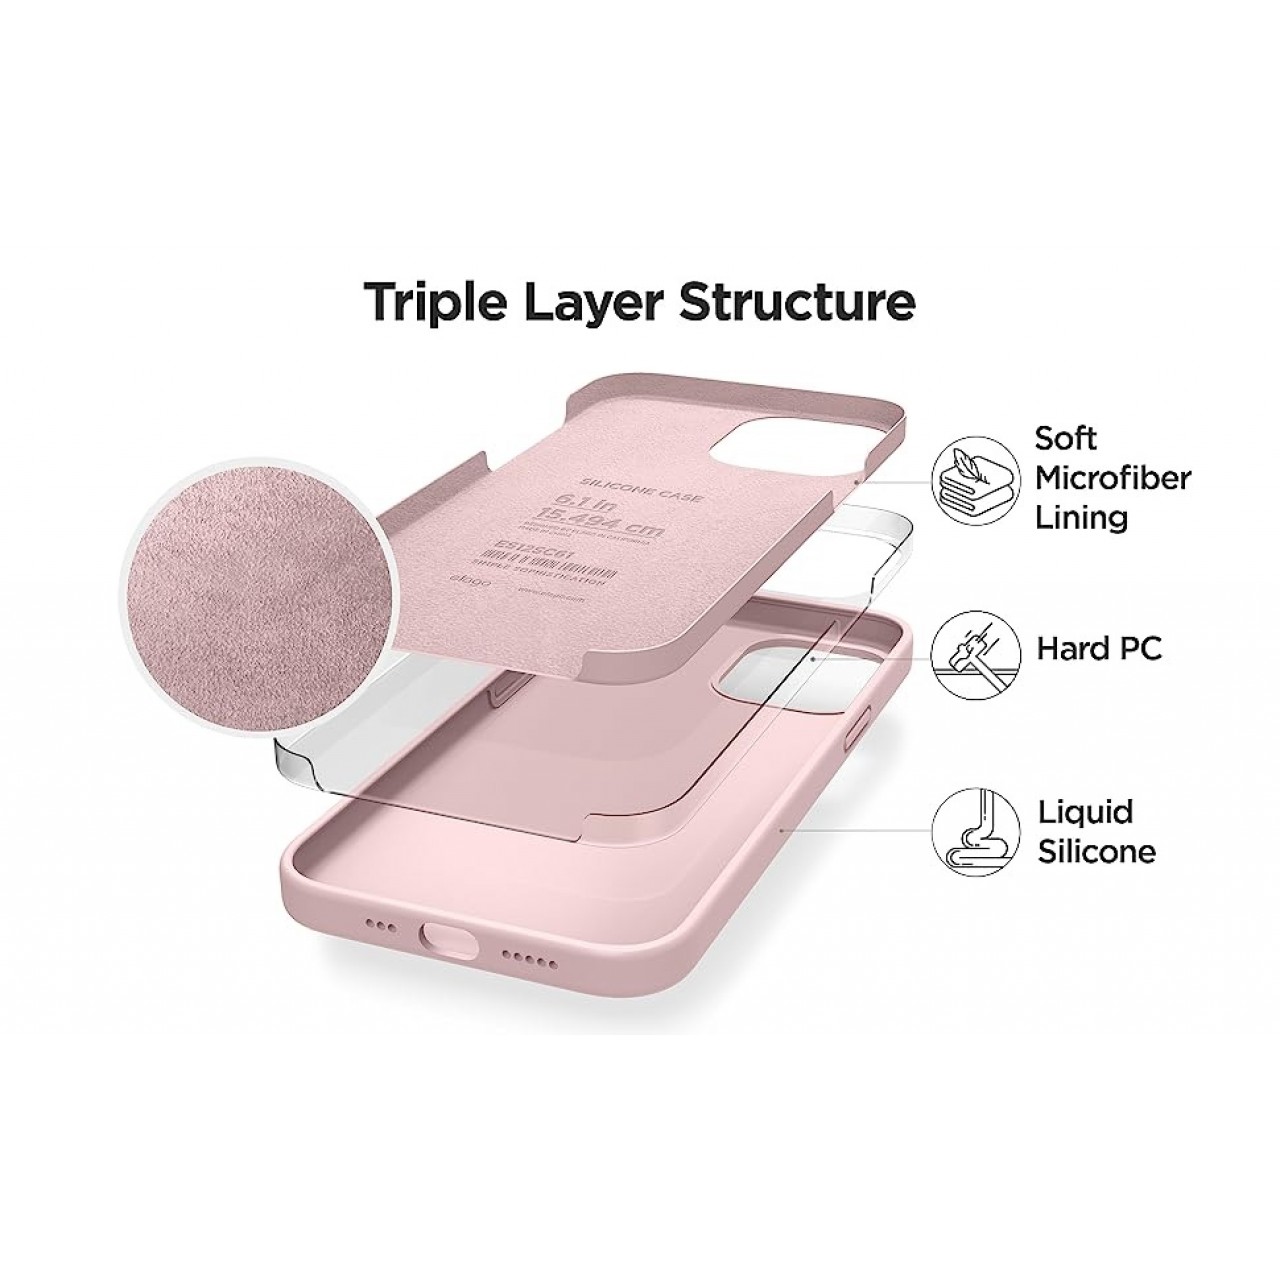 iPhone 12 Pro Θήκη Σιλικόνης Κόκκινη - Back Case Silicone Red